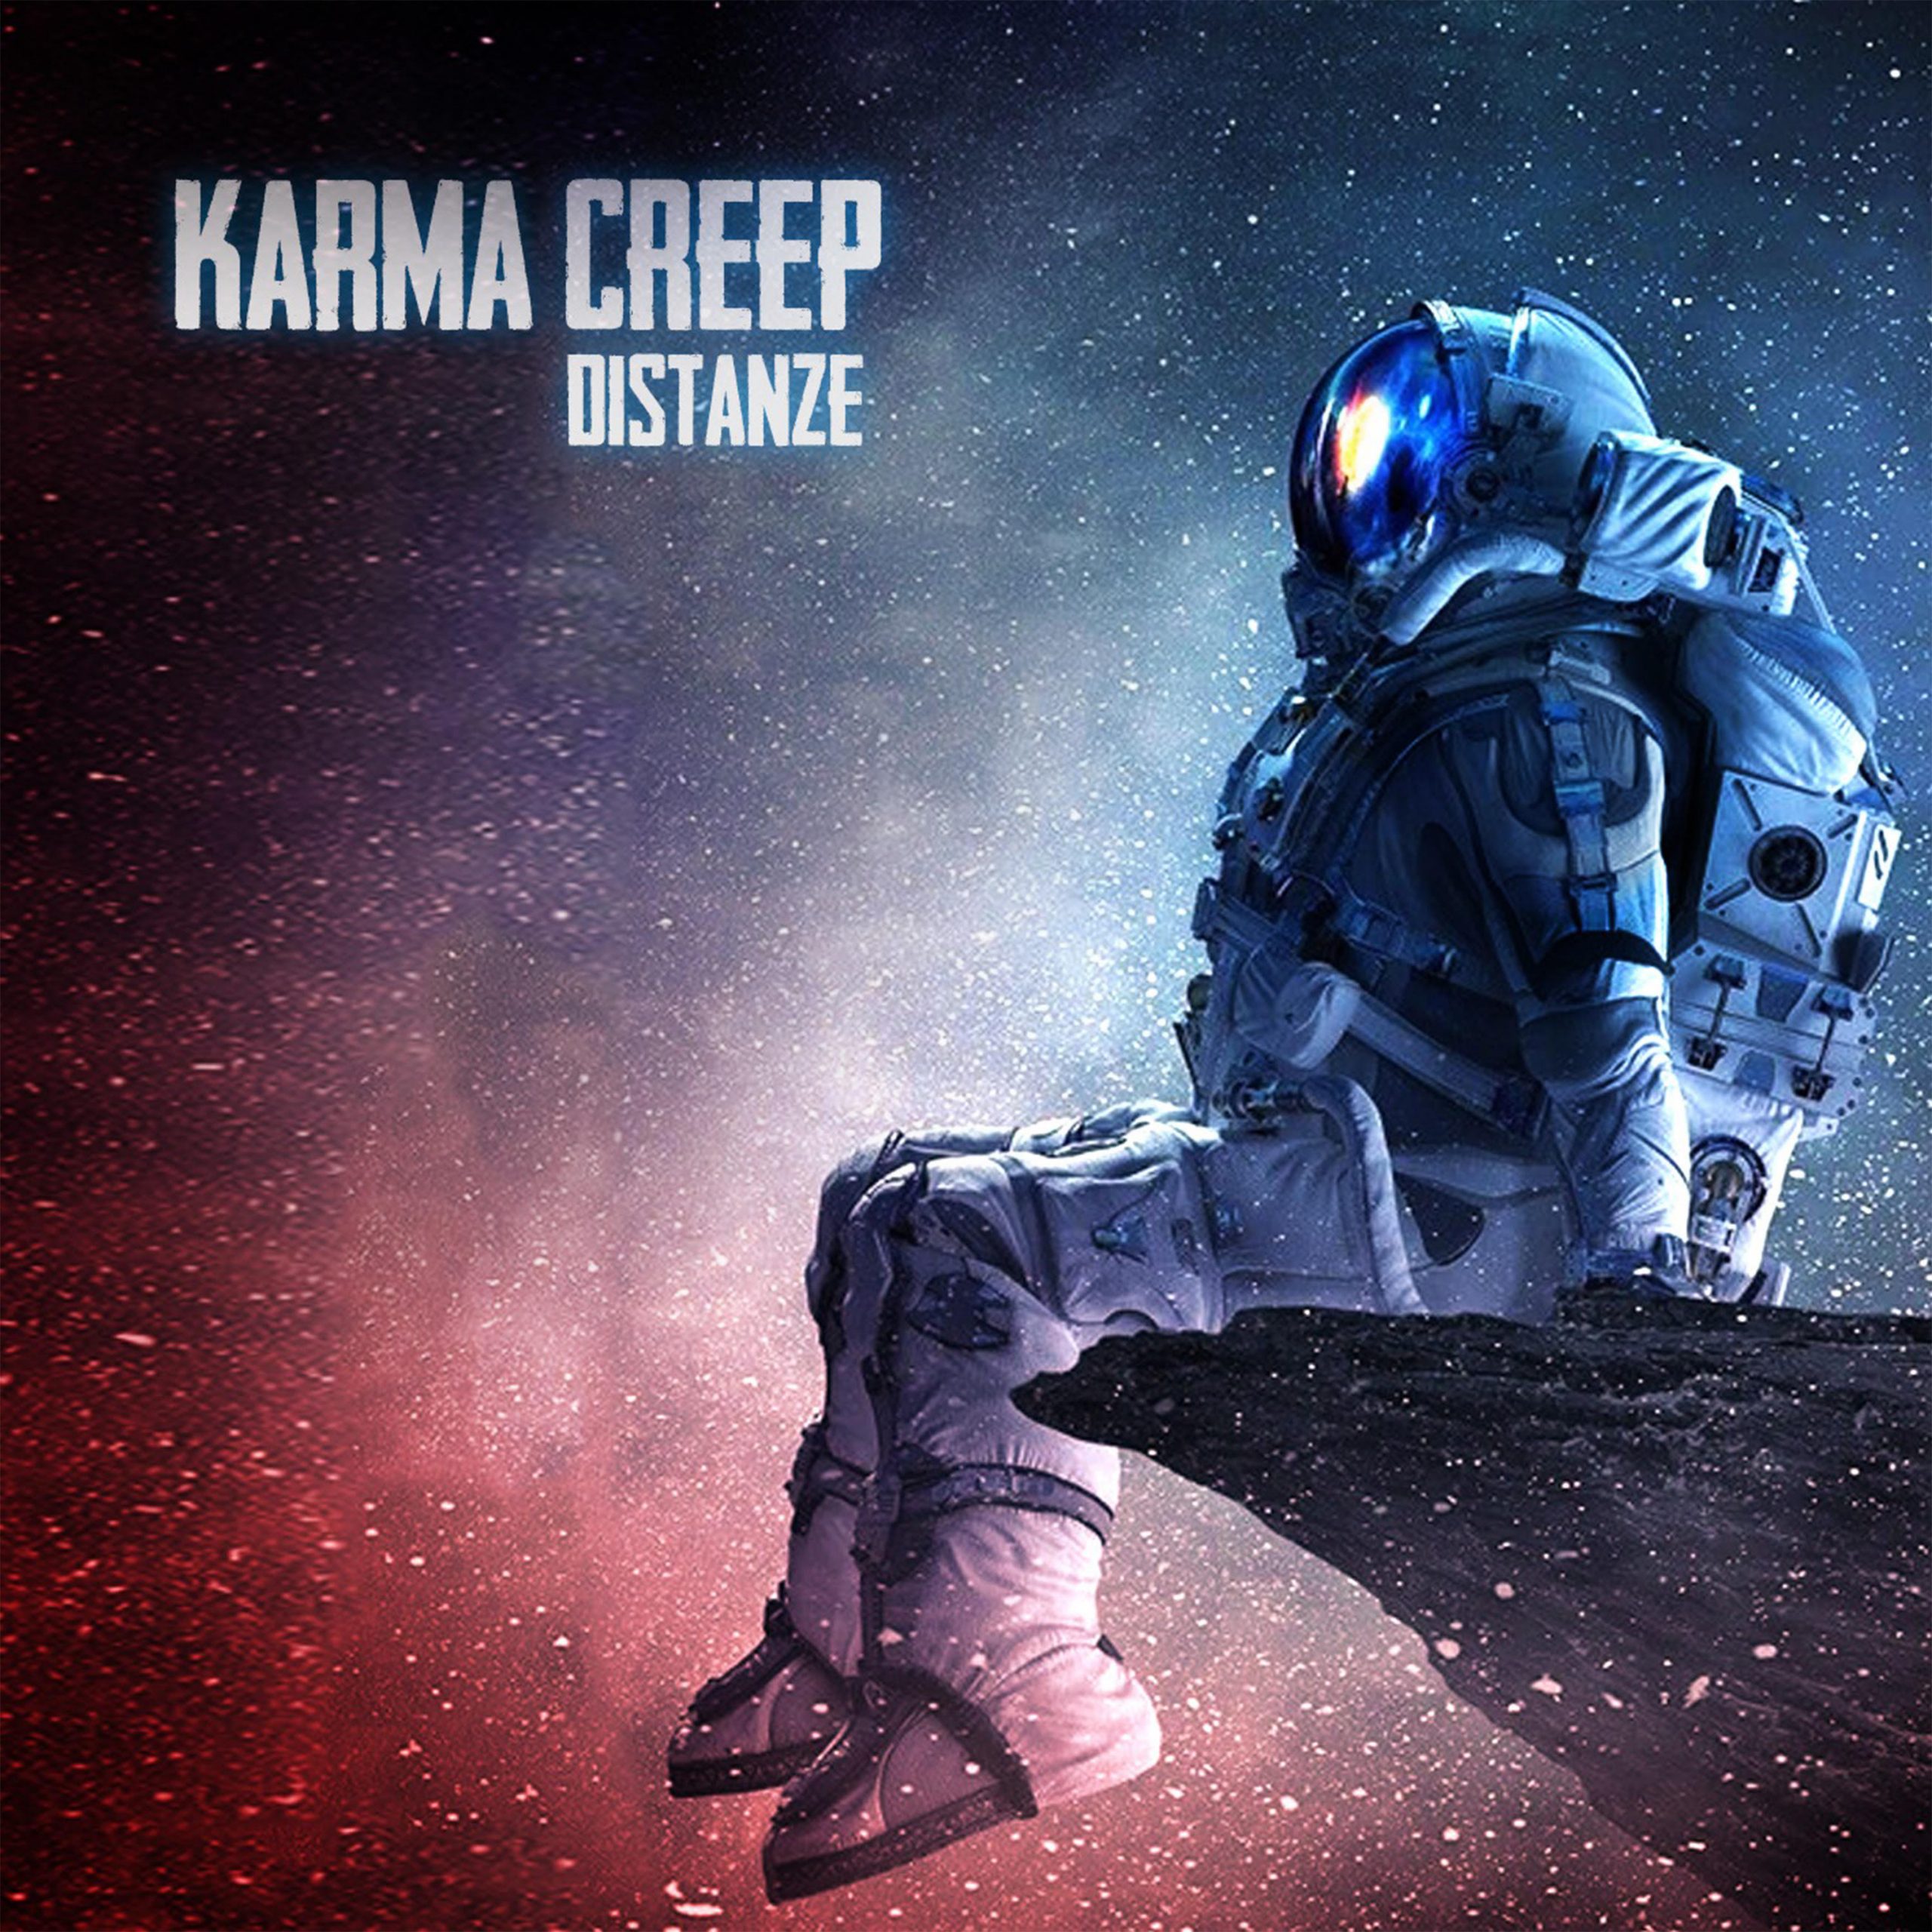 Karma Creep  – “Distanze”